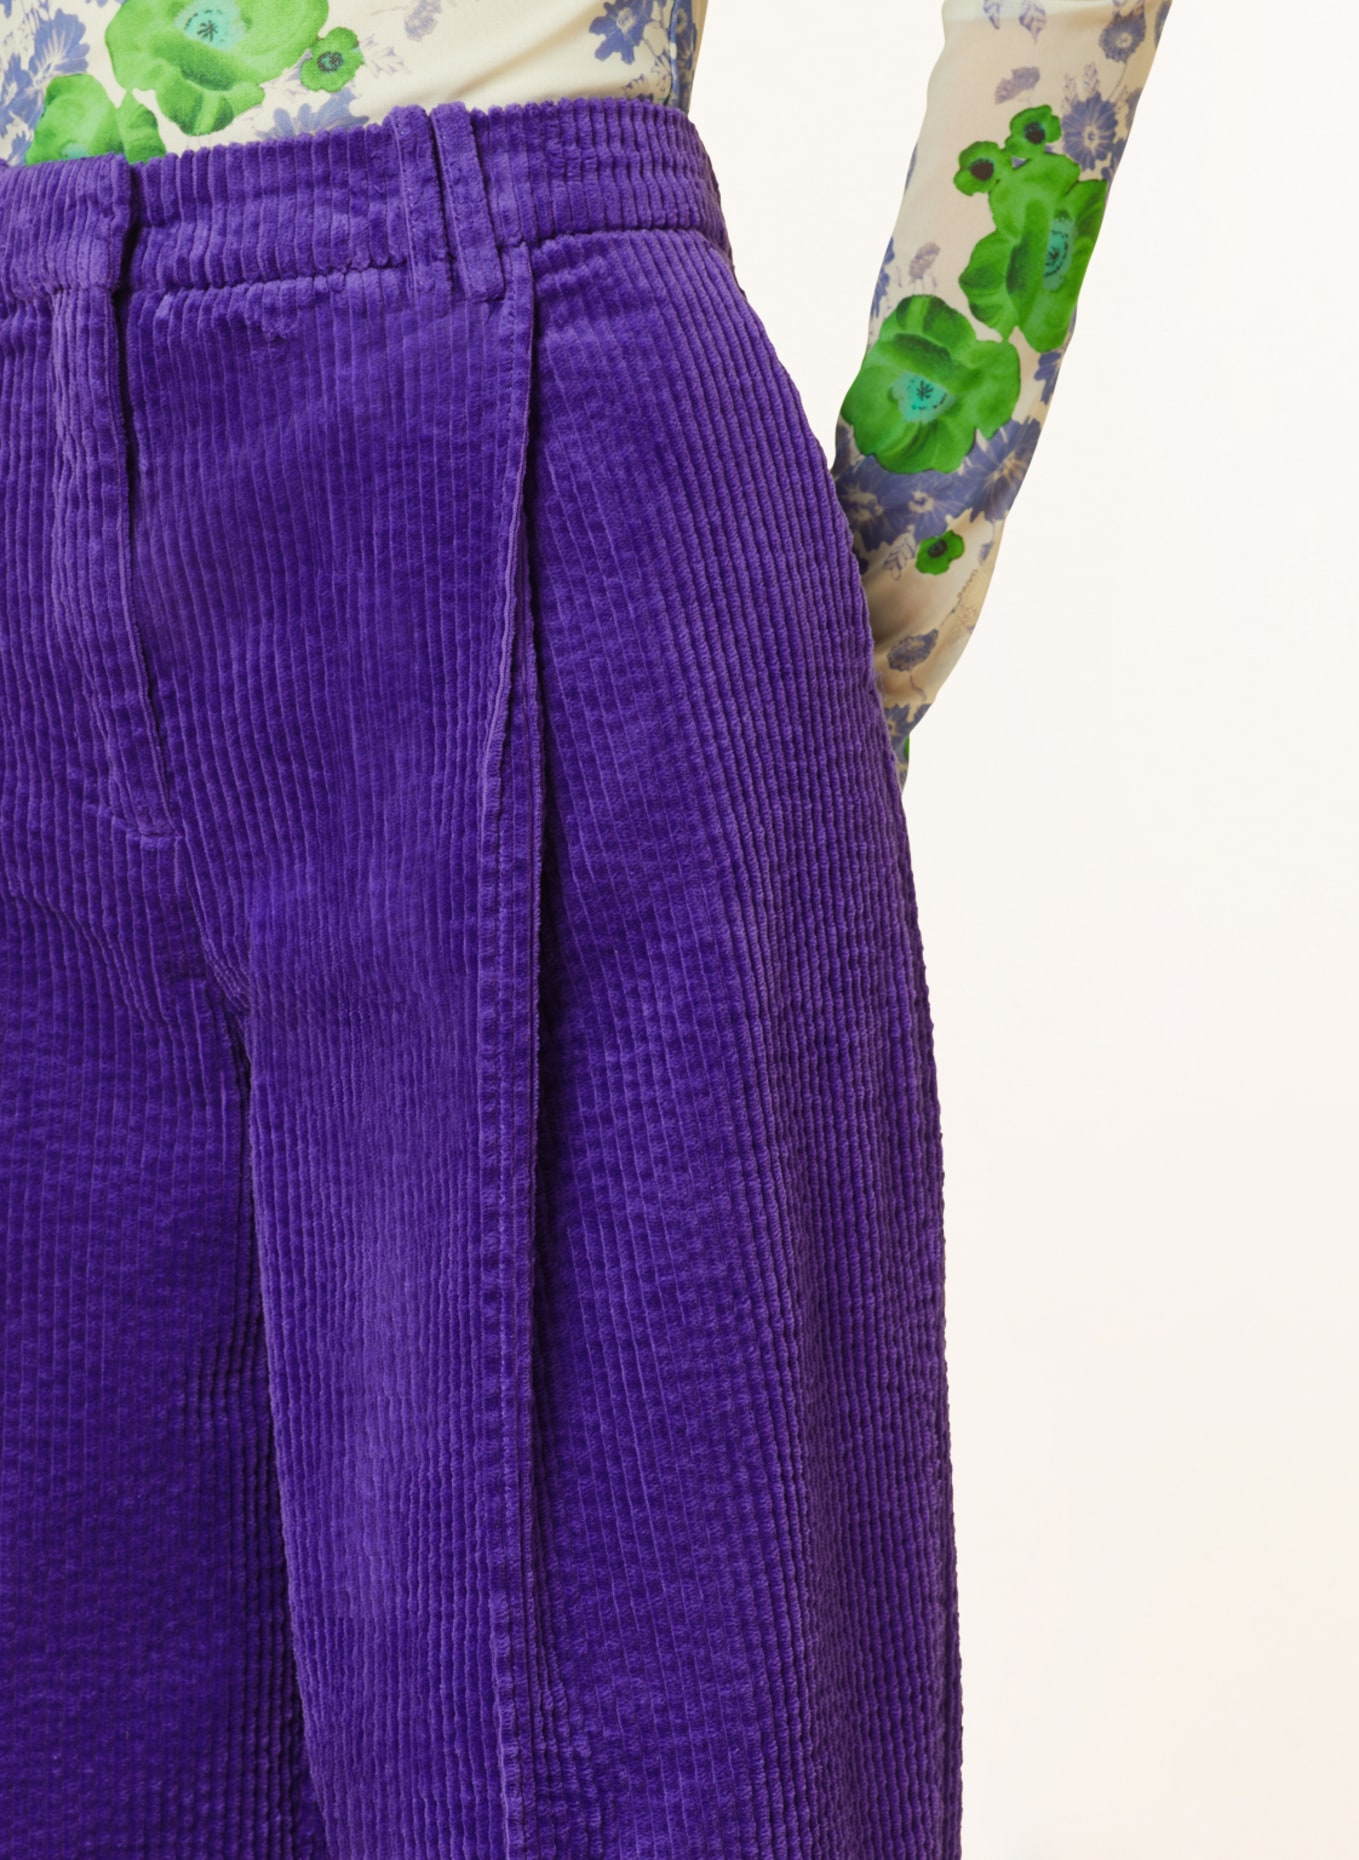 80s pinkish purple corduroy pants 💜 Vintage 1980s... - Depop